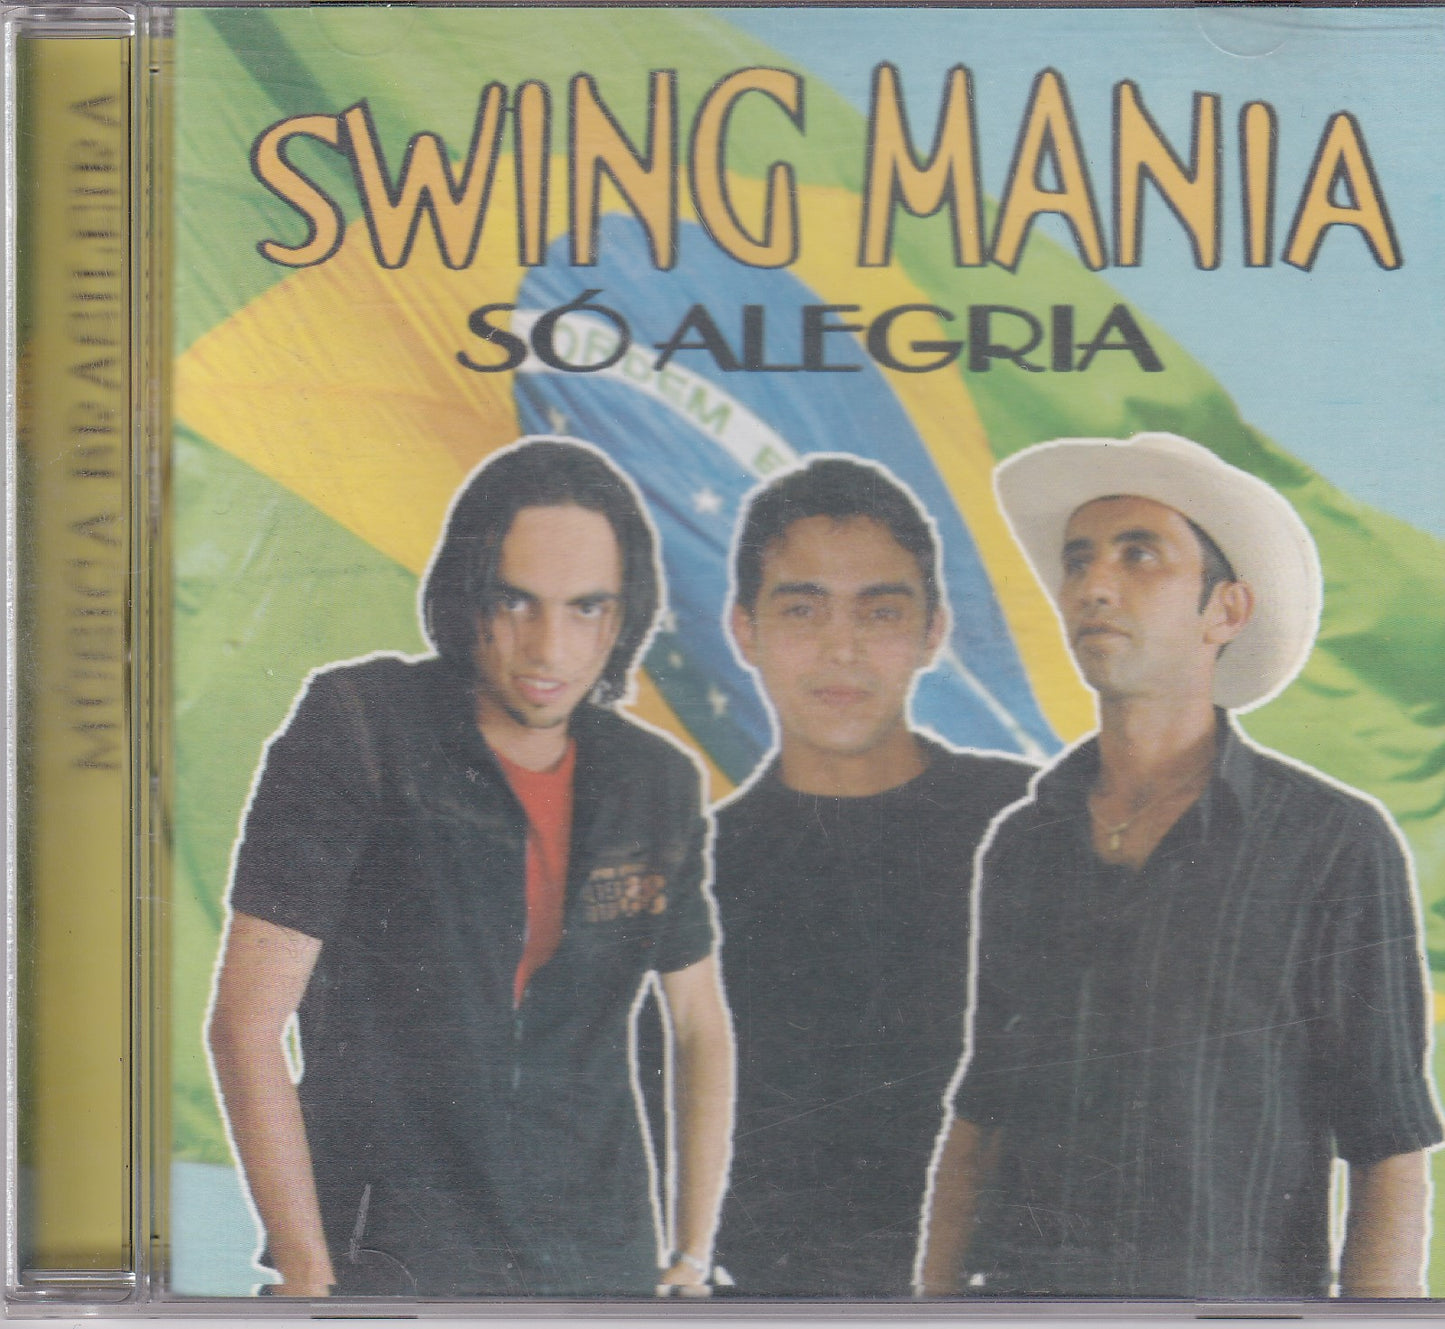 CD SWING MANIA SÓ ALEGRIA - USADO